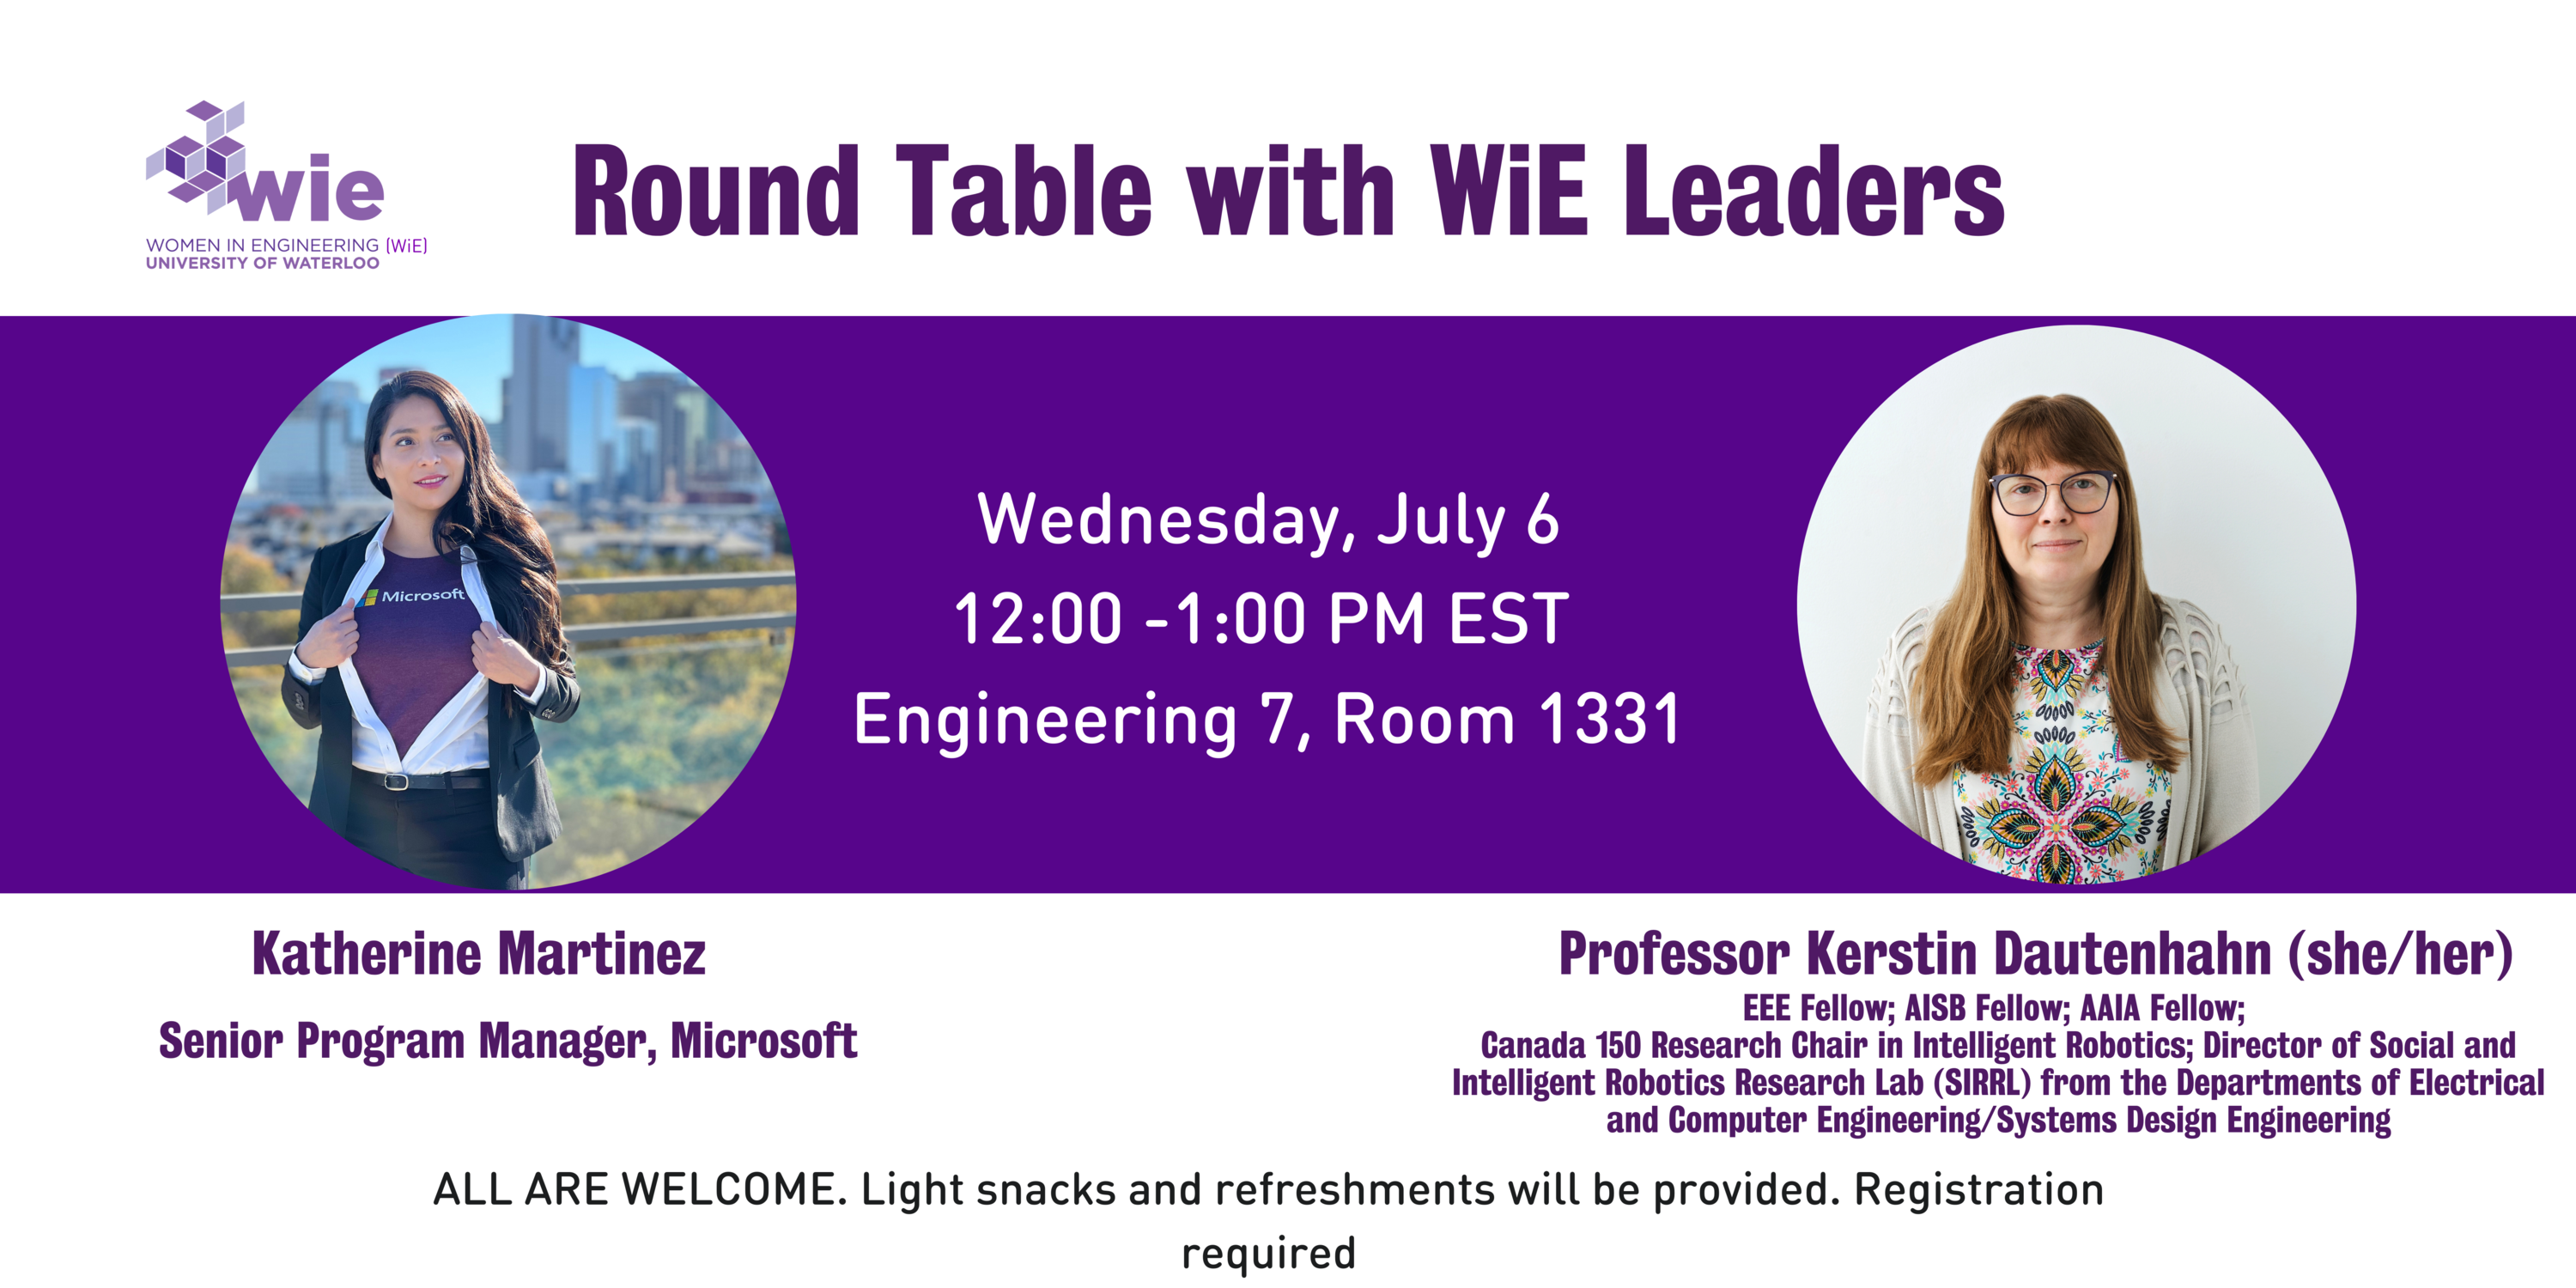 Round Table with WiE Leaders featuring Katherine Martinez and Professor Kerstin Dautenhahn